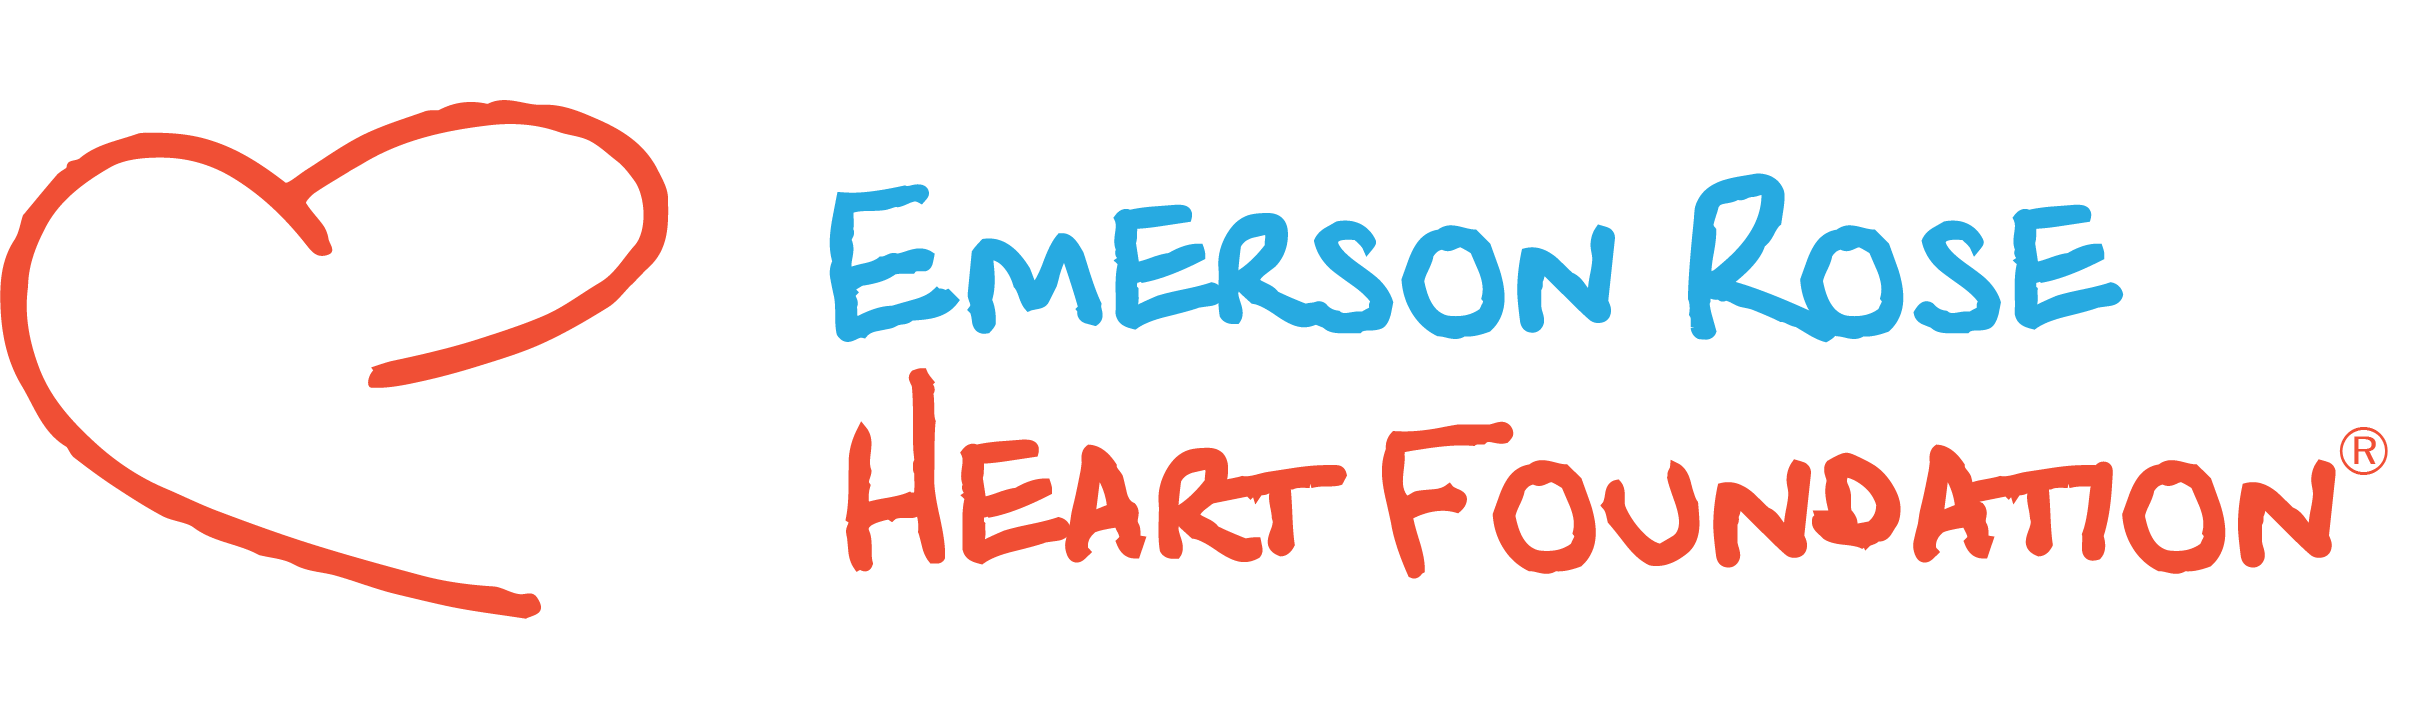 Emerson Rose Heart Foundation.